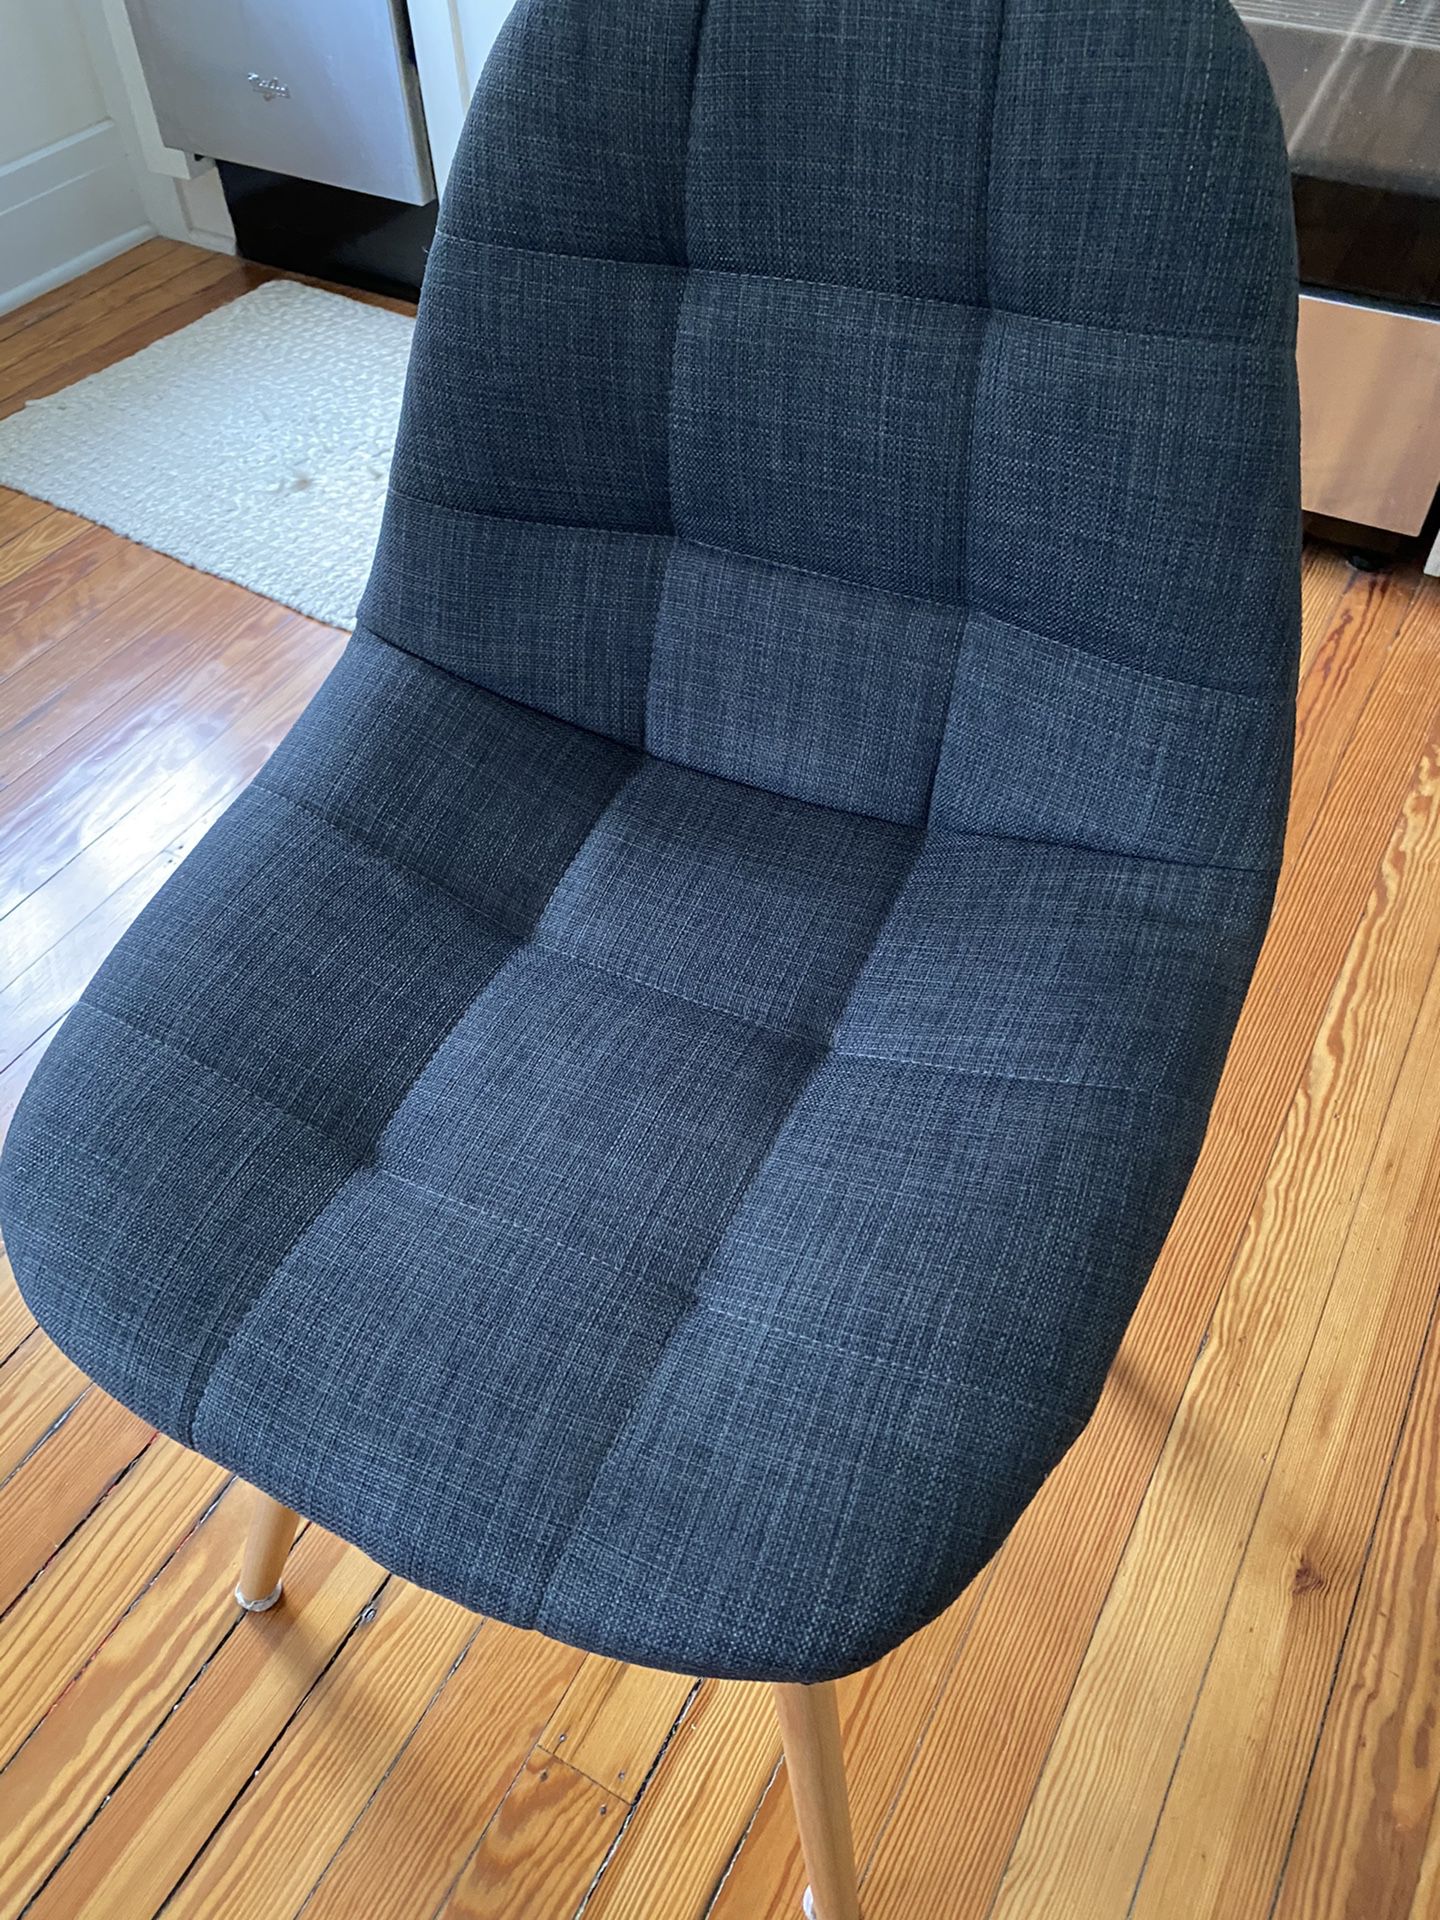 Mid century Modern Chairs - 2